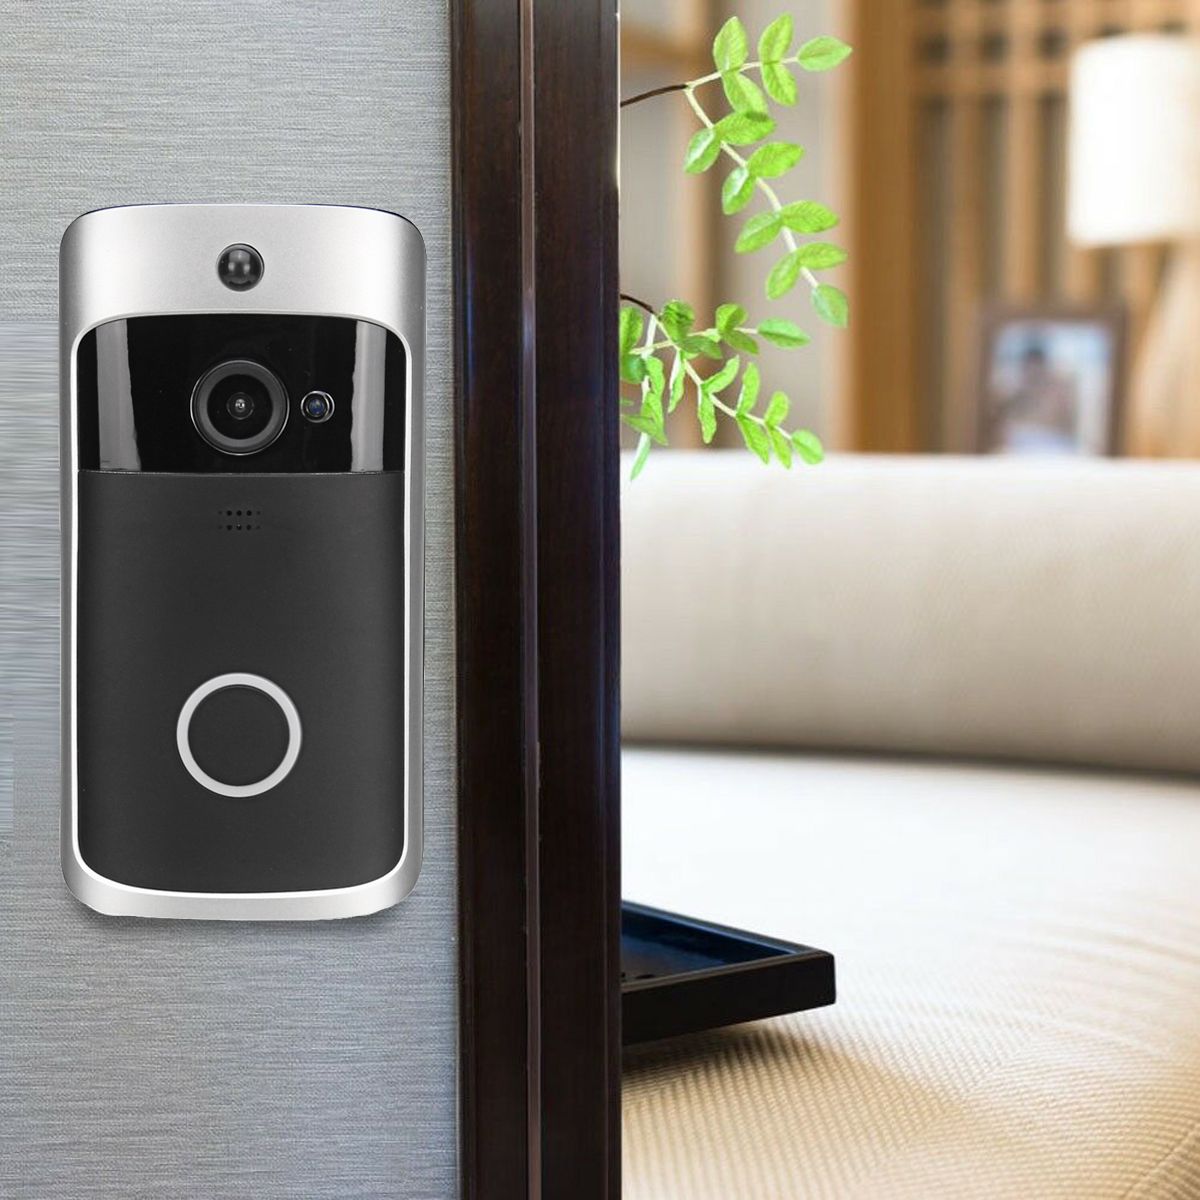 M3-720P-Smart-Wireless-WiFi-Ring-Video-Doorbell-Camera-Phone-Home-Intercom-Bell-1510207